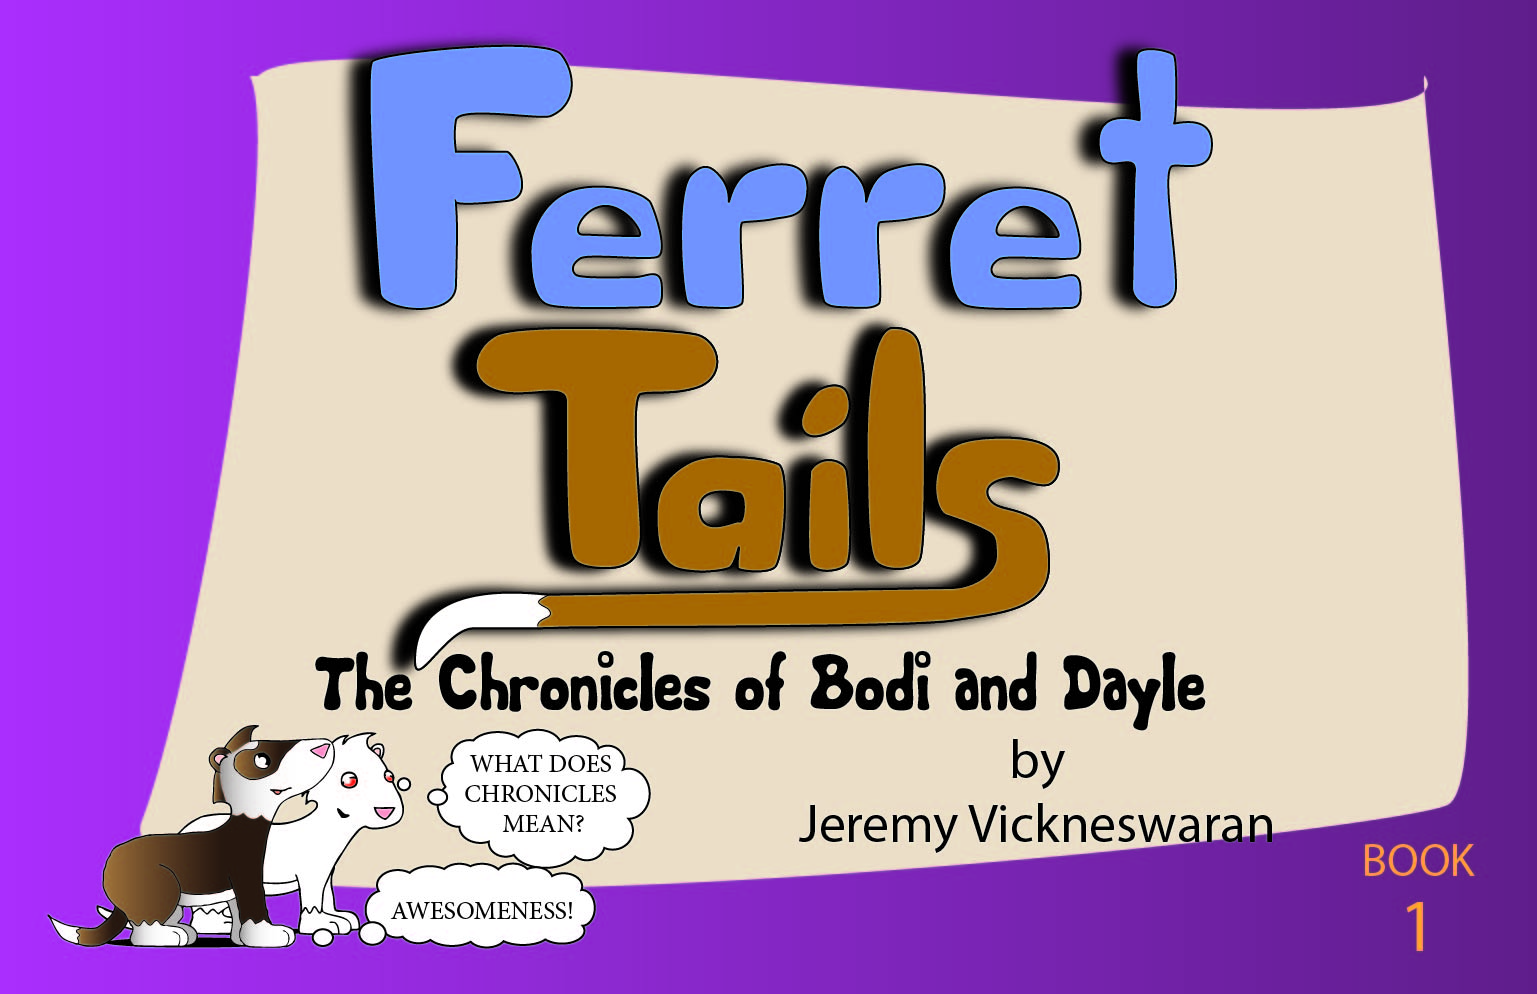 ferret tails book 1